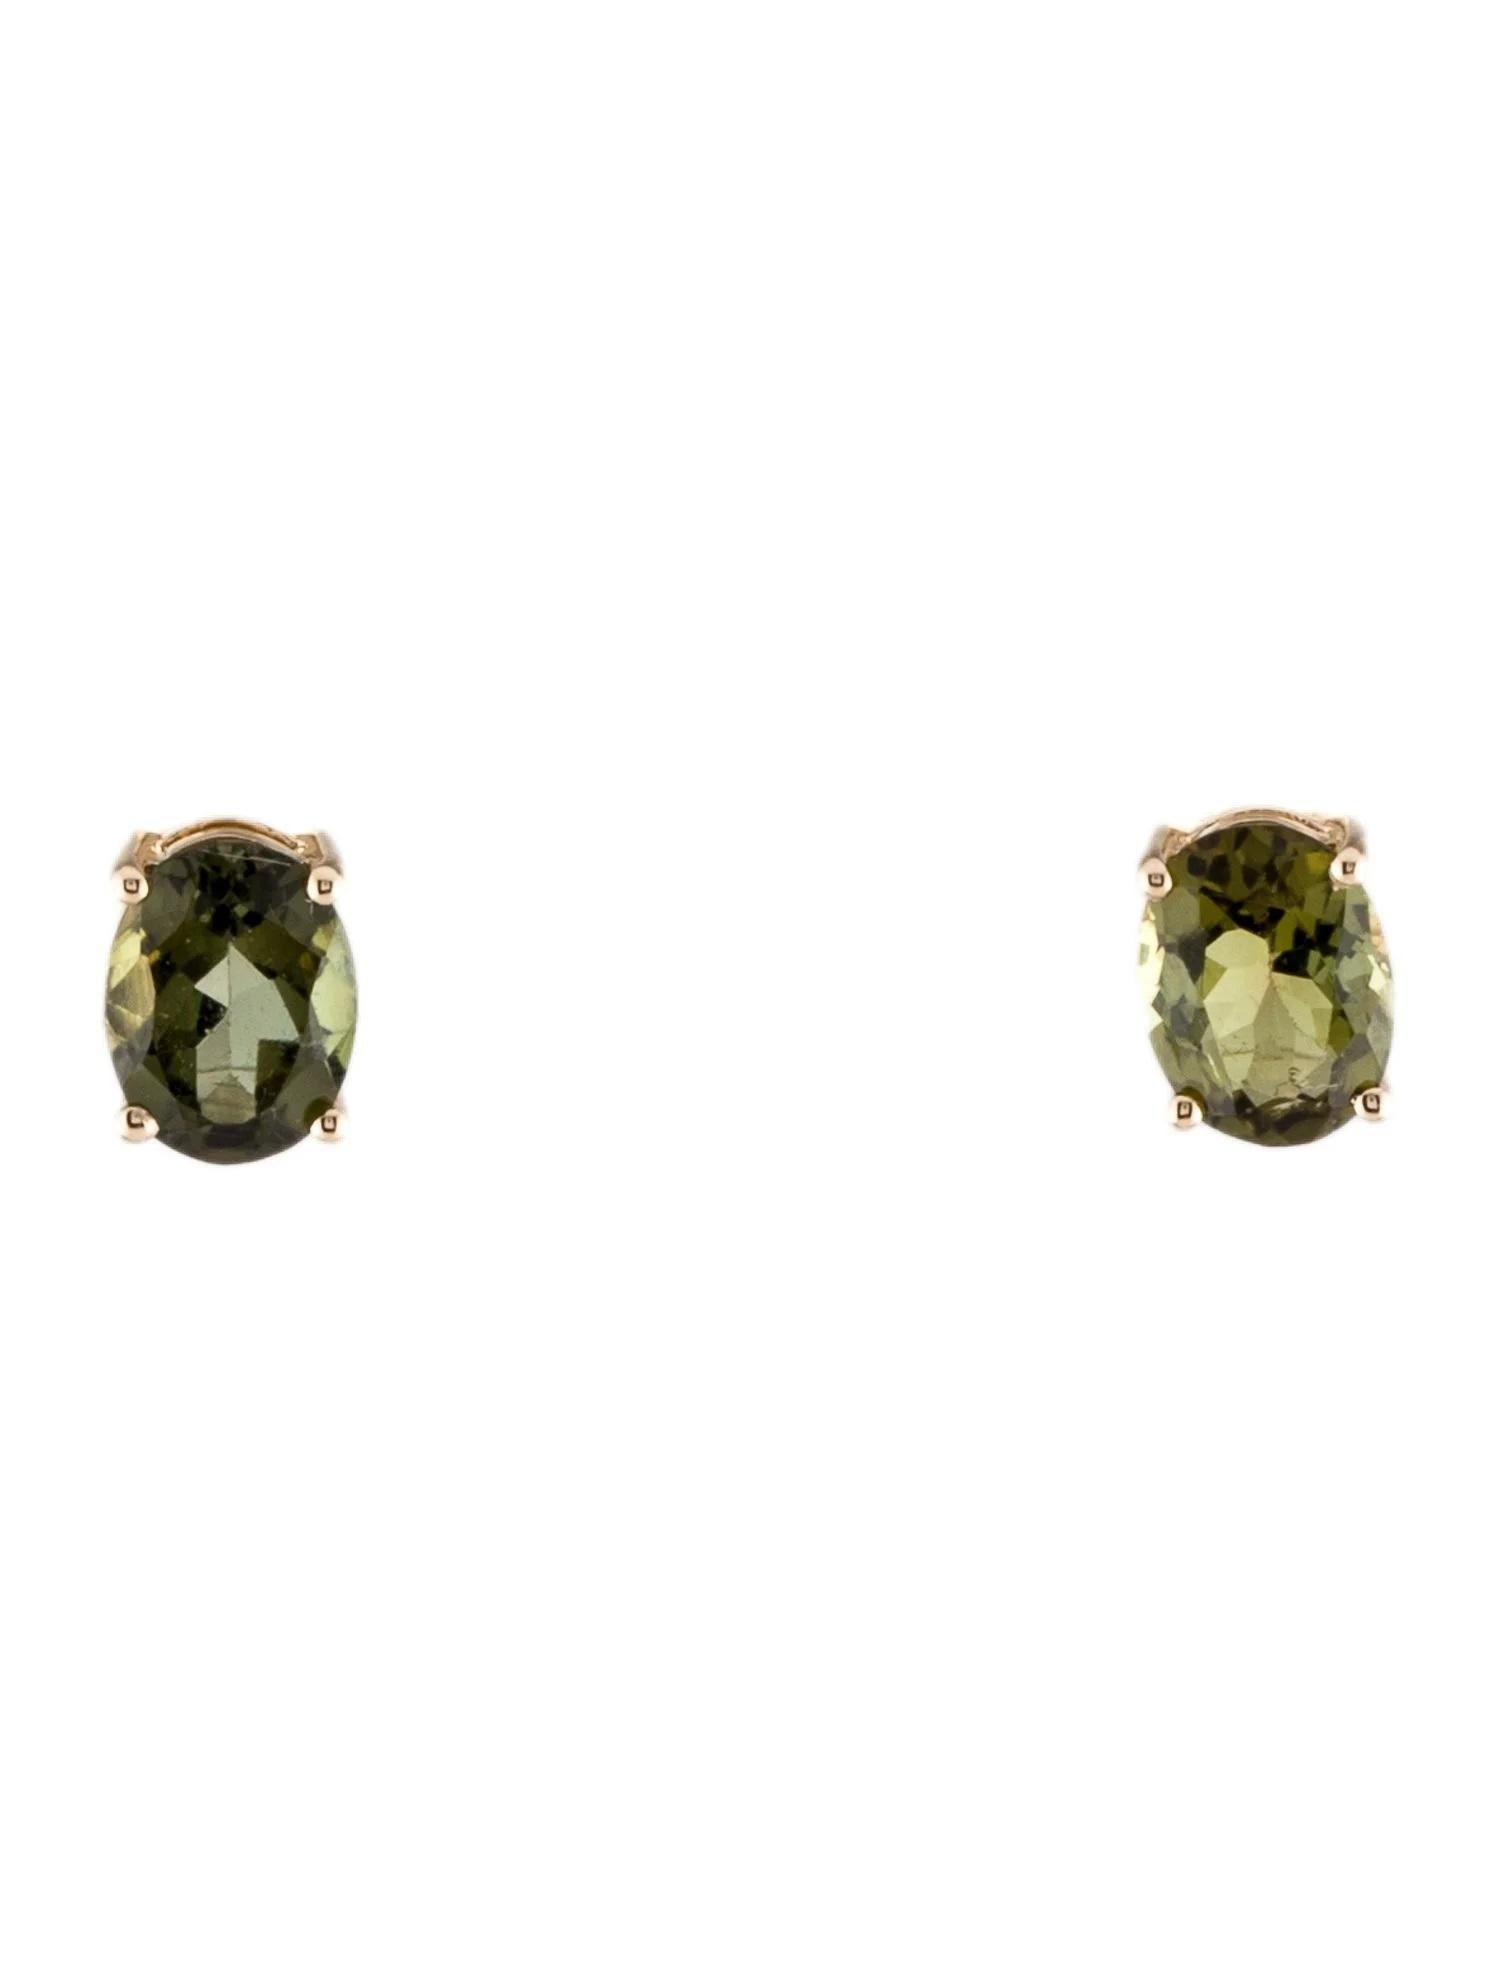 Oval Cut 14K 2.54ctw Tourmaline Stud Earrings  Oval Modified Brilliant Gemstones  Green For Sale